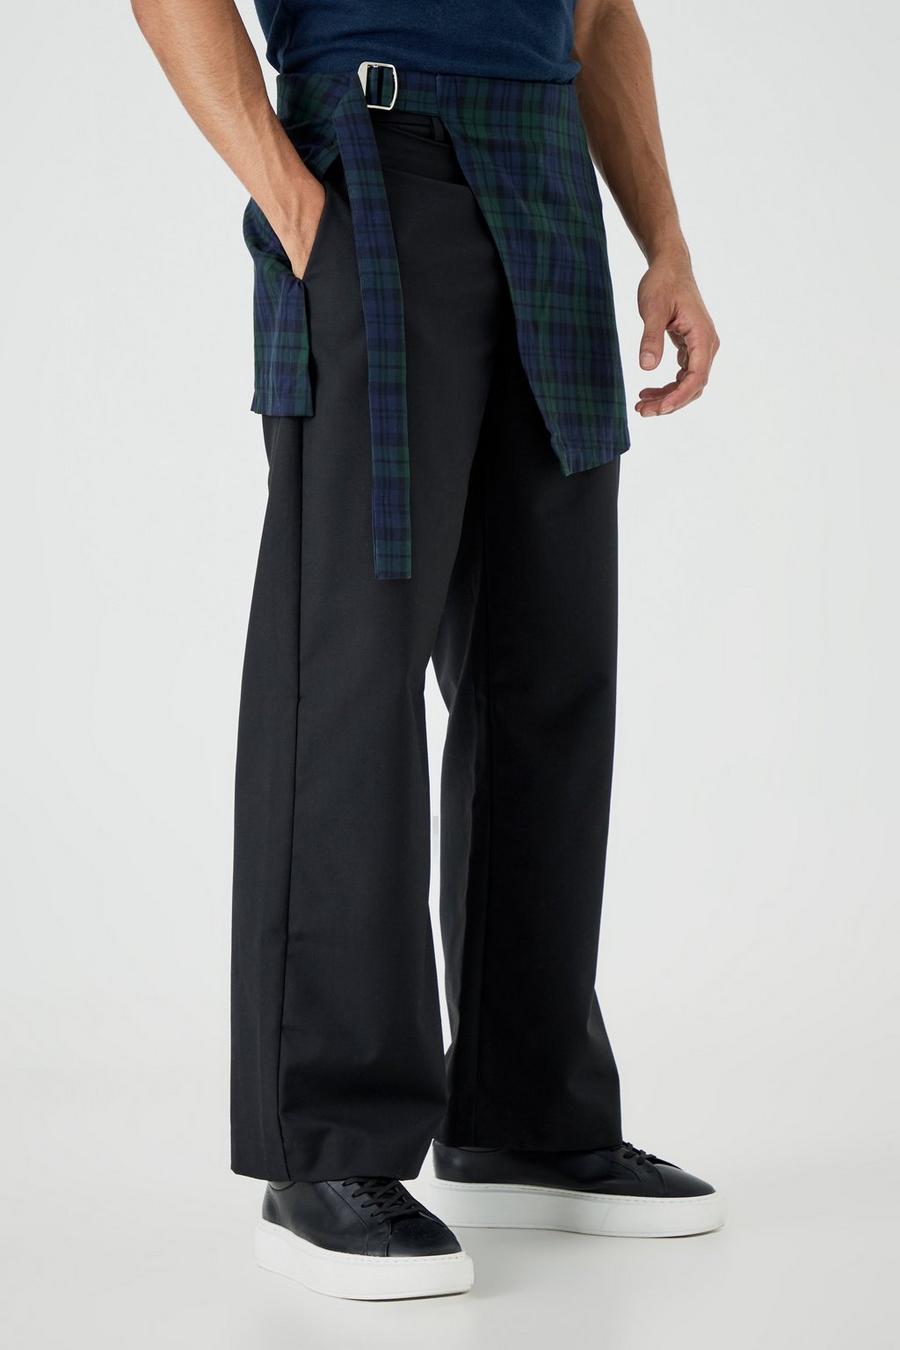 Black Plaid Skirt Tailored Trousers